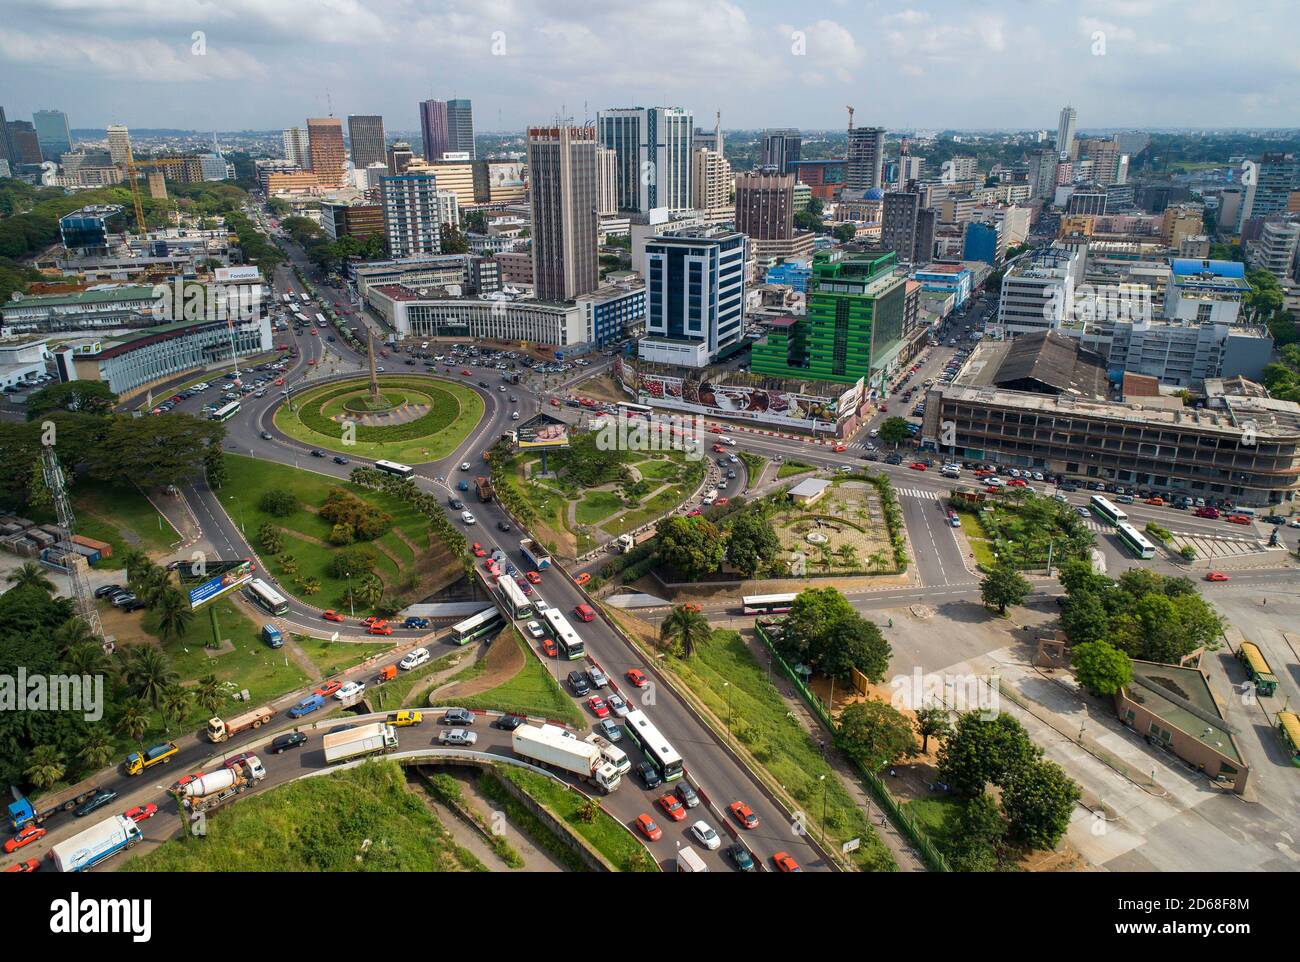 Cote d'Ivoire (Ivory Coast), Abidjan: aerial view of the business district of Le Plateau. Office buildings and traffic in 'place de la Republique' squ Stock Photo